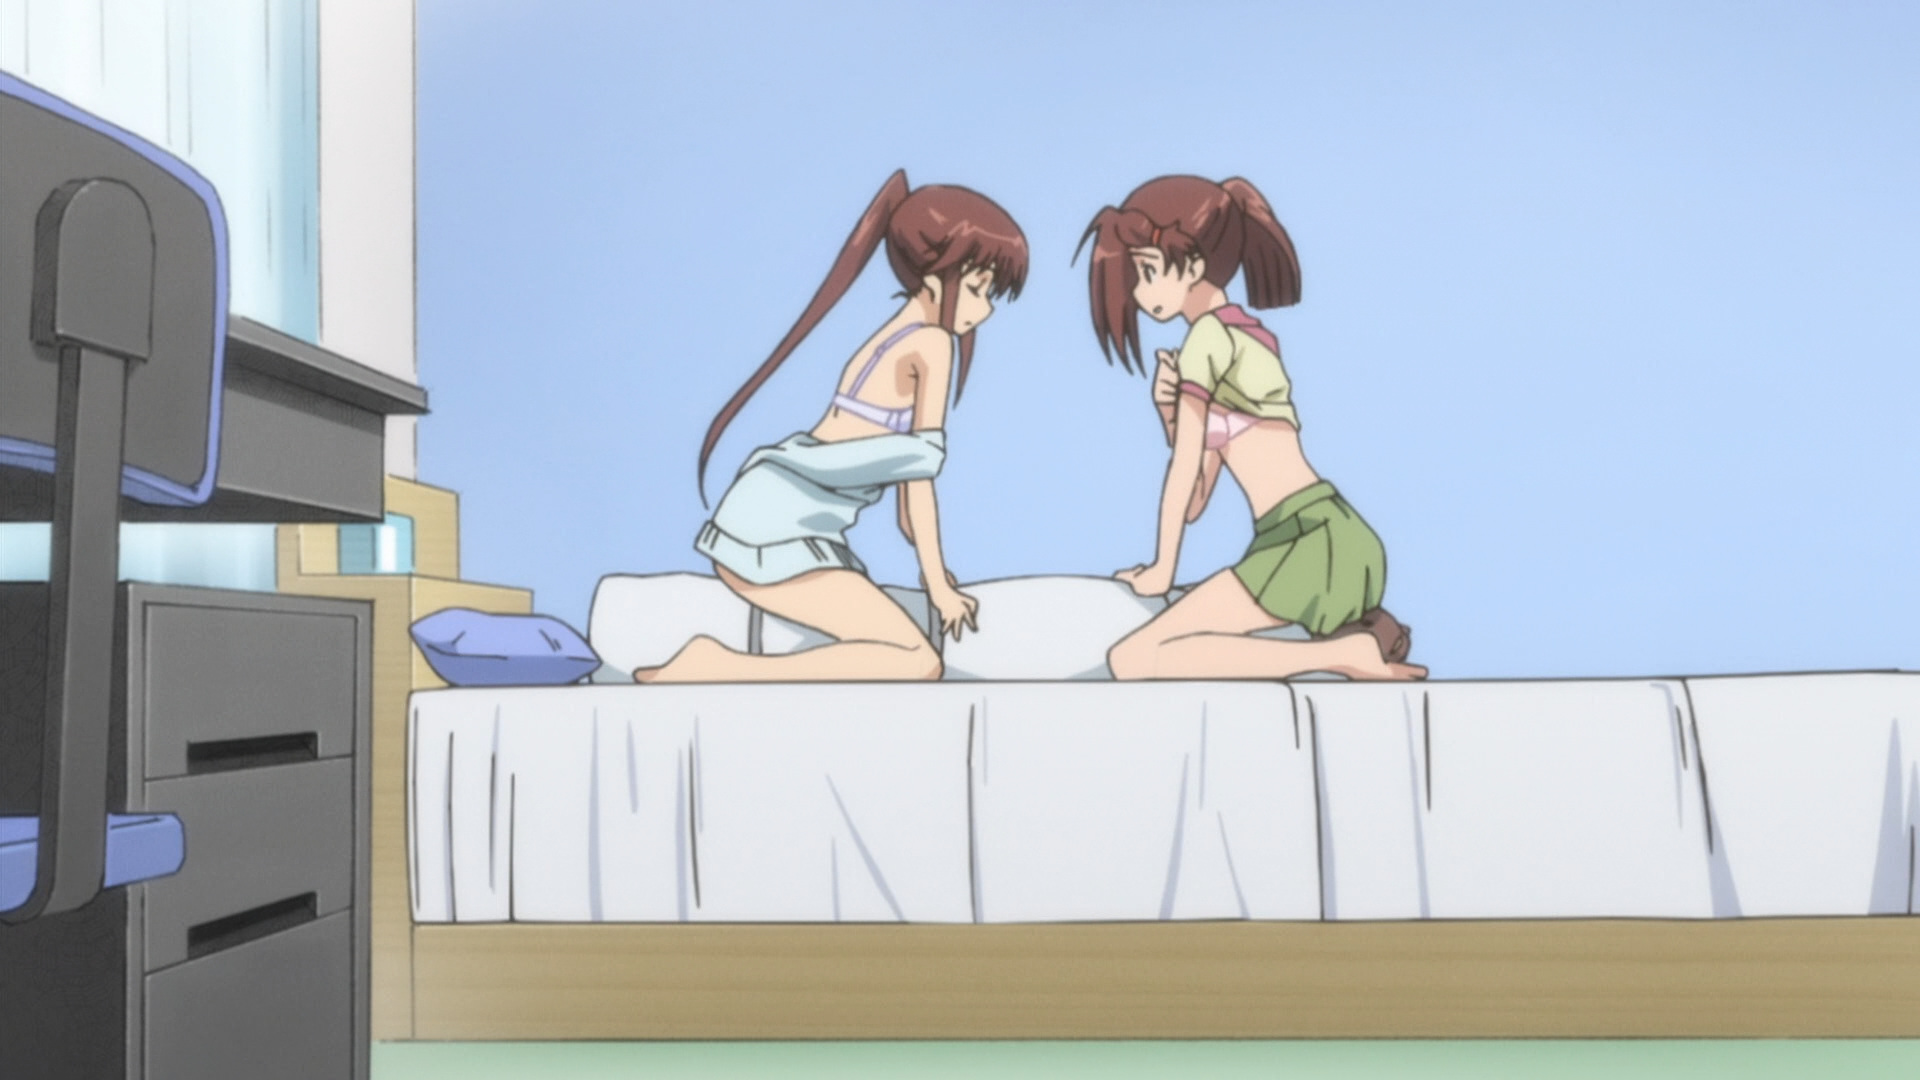 Anime lesbians humping